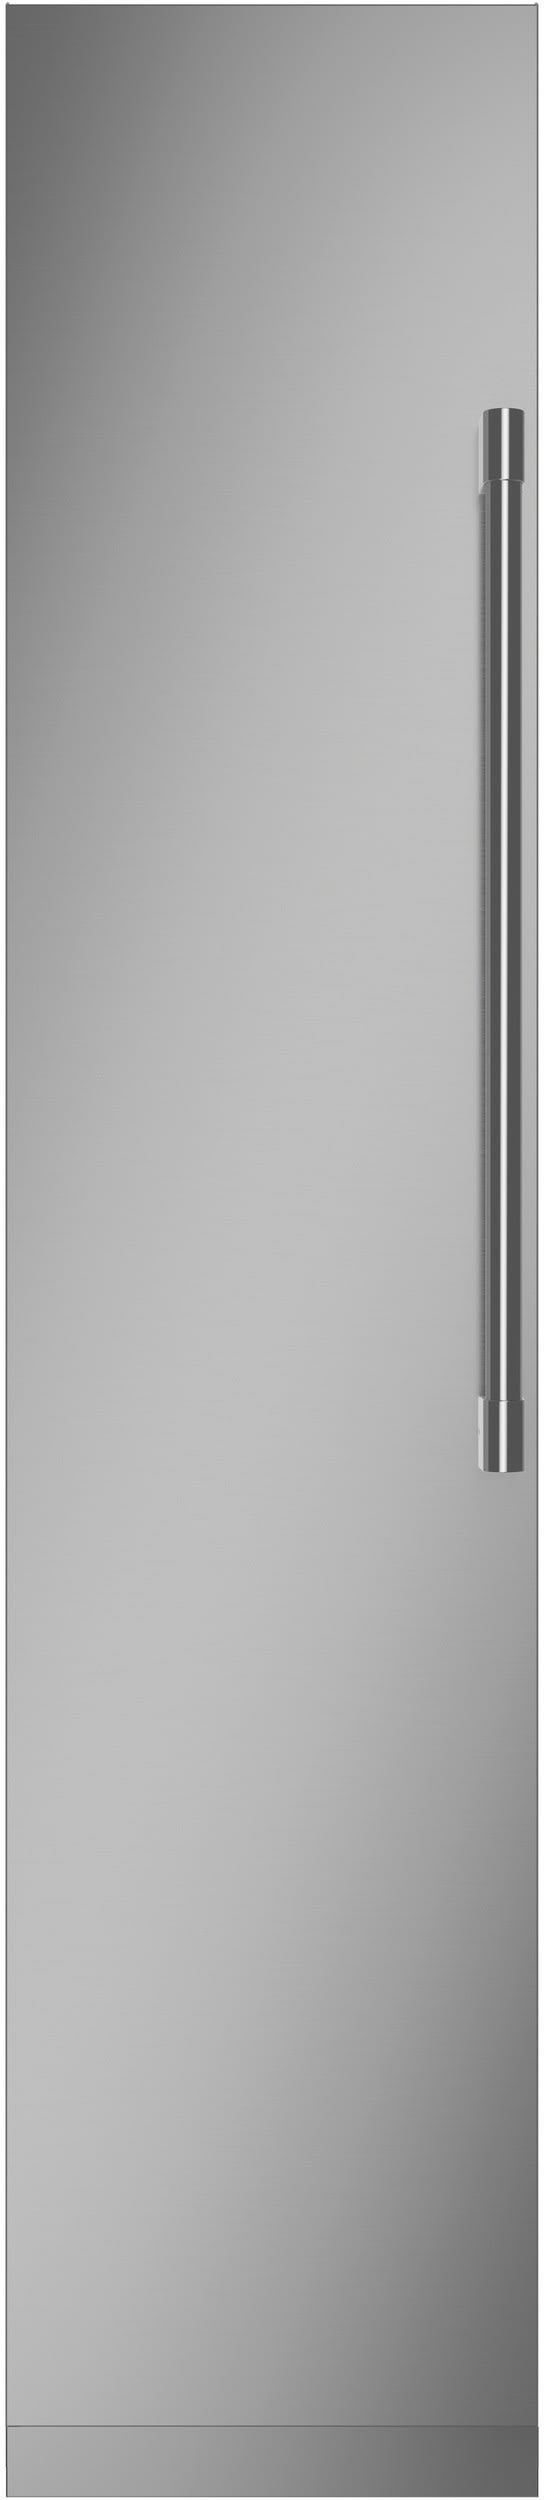 18 Inch Panel Ready Premium Column Smart Freezer